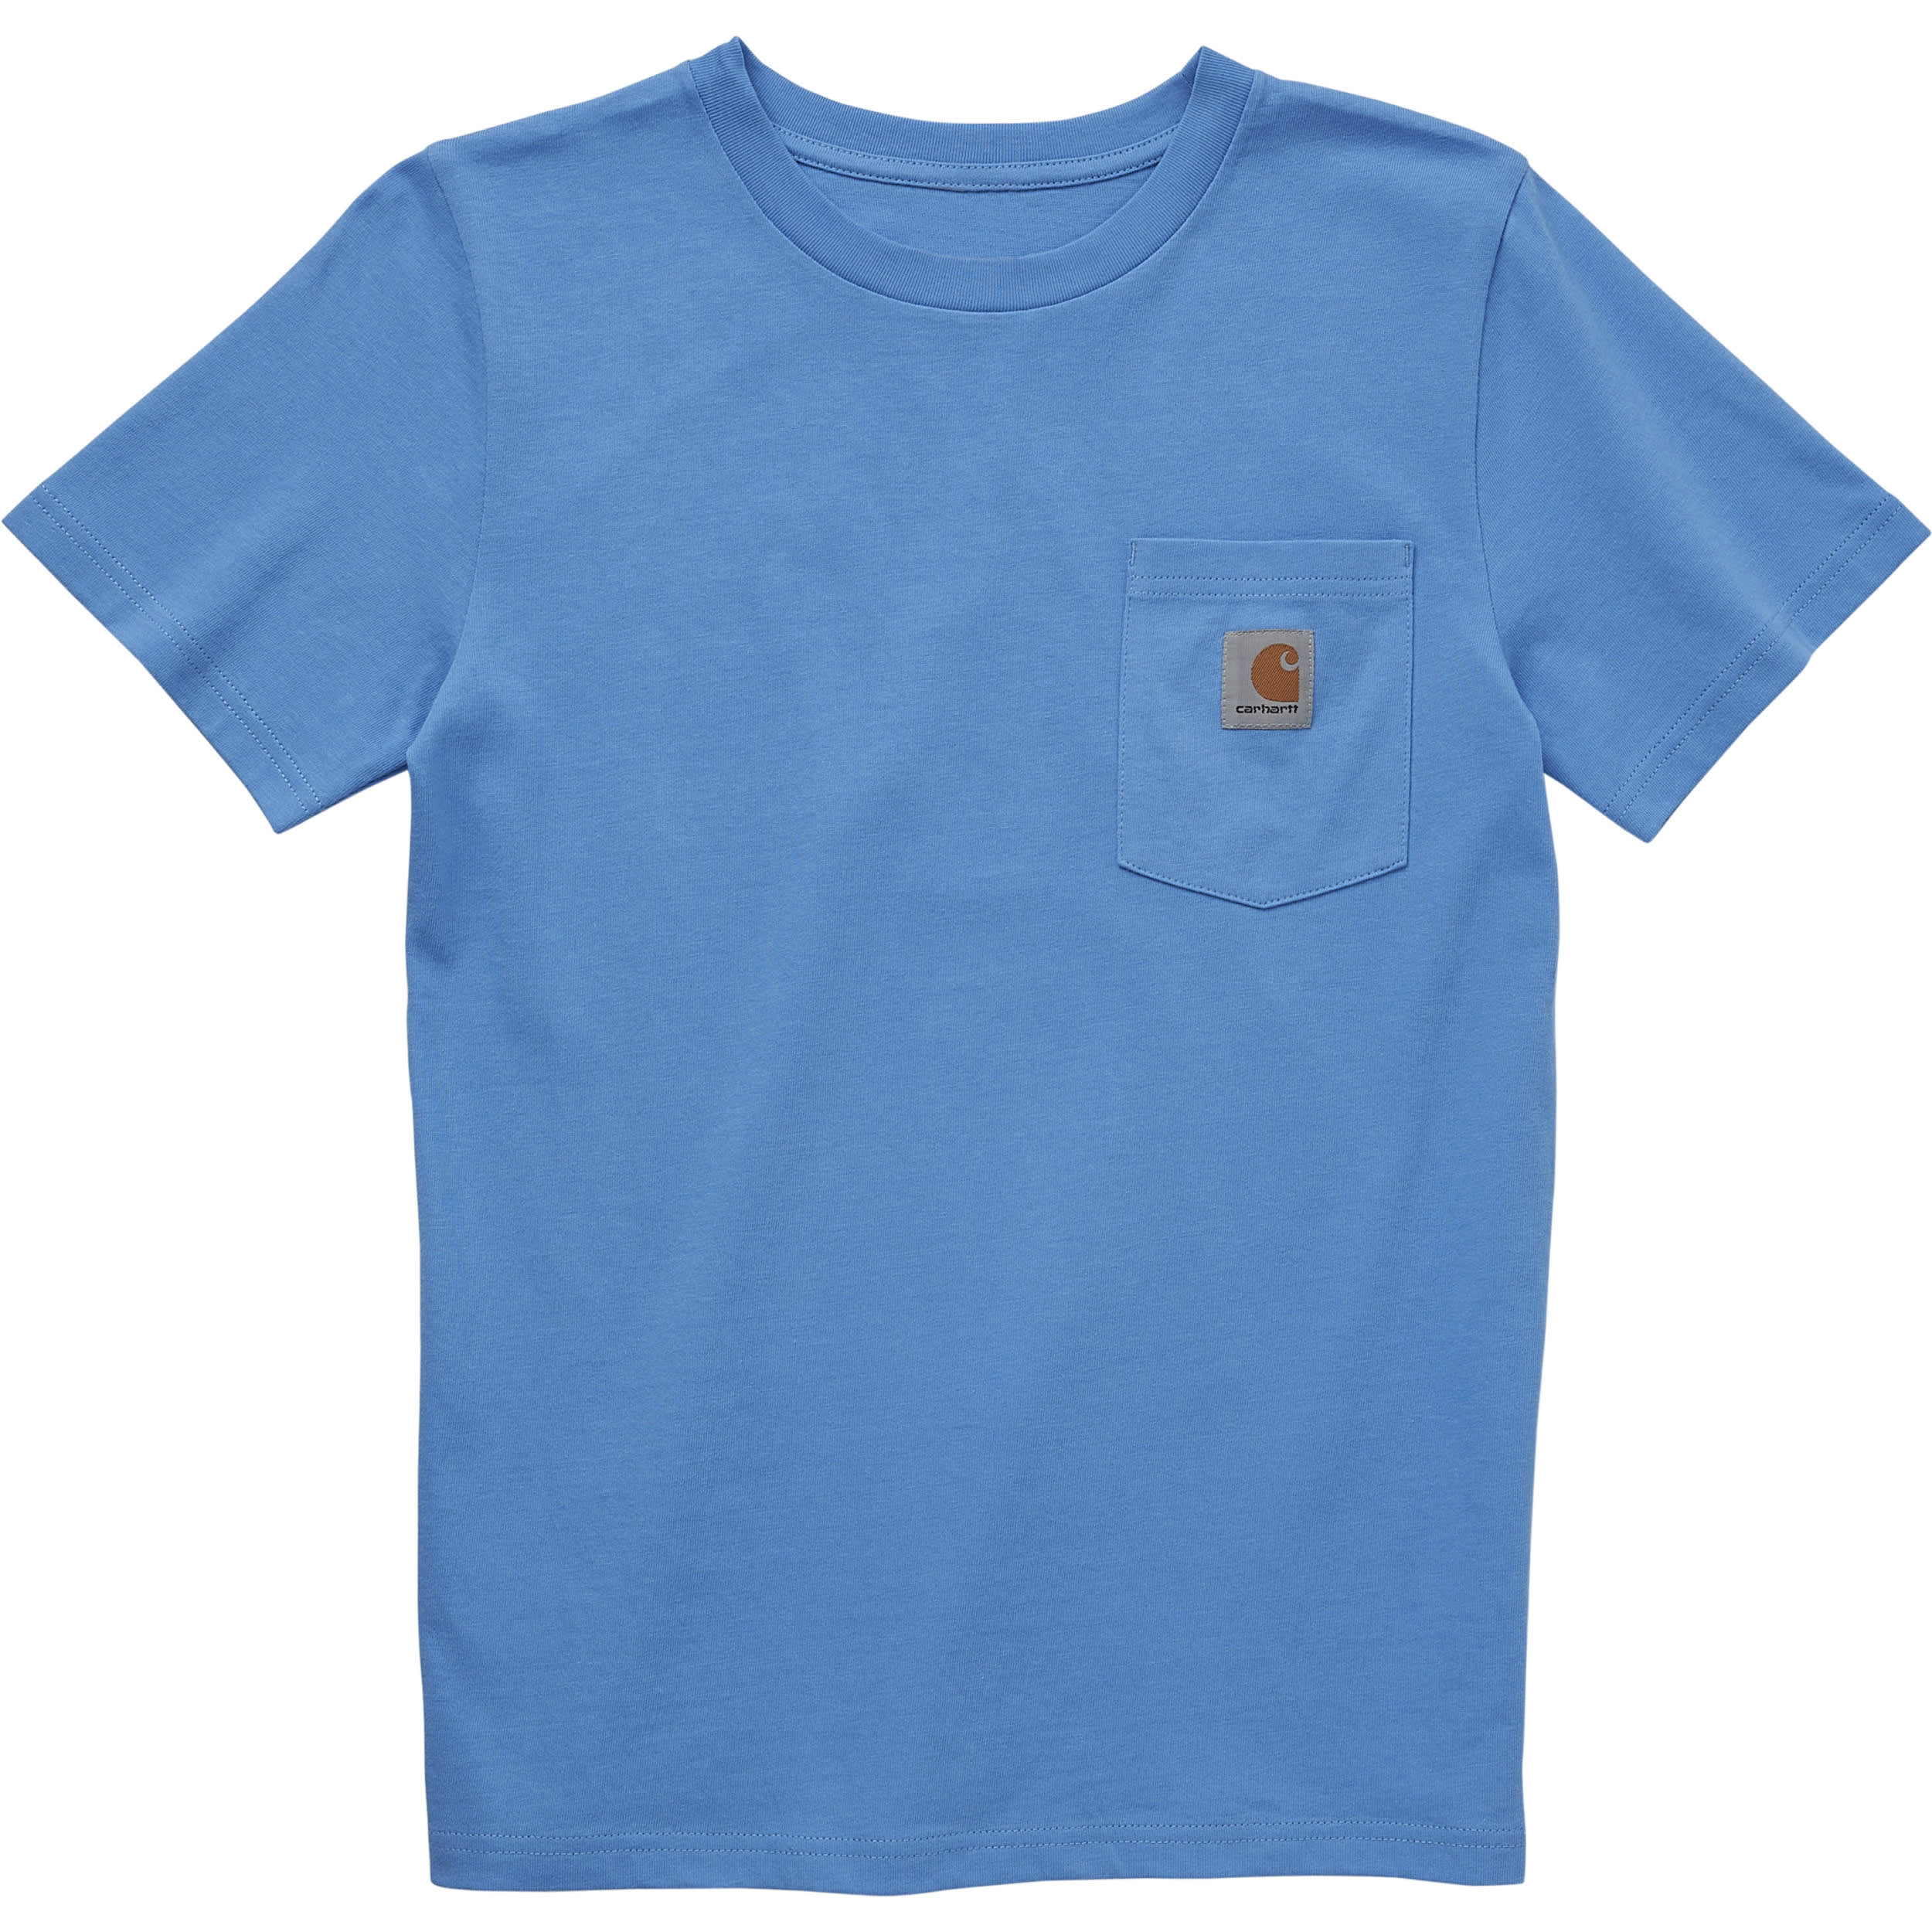 Carhartt® Toddler Boys' Outfish Short-Sleeve T-Shirt